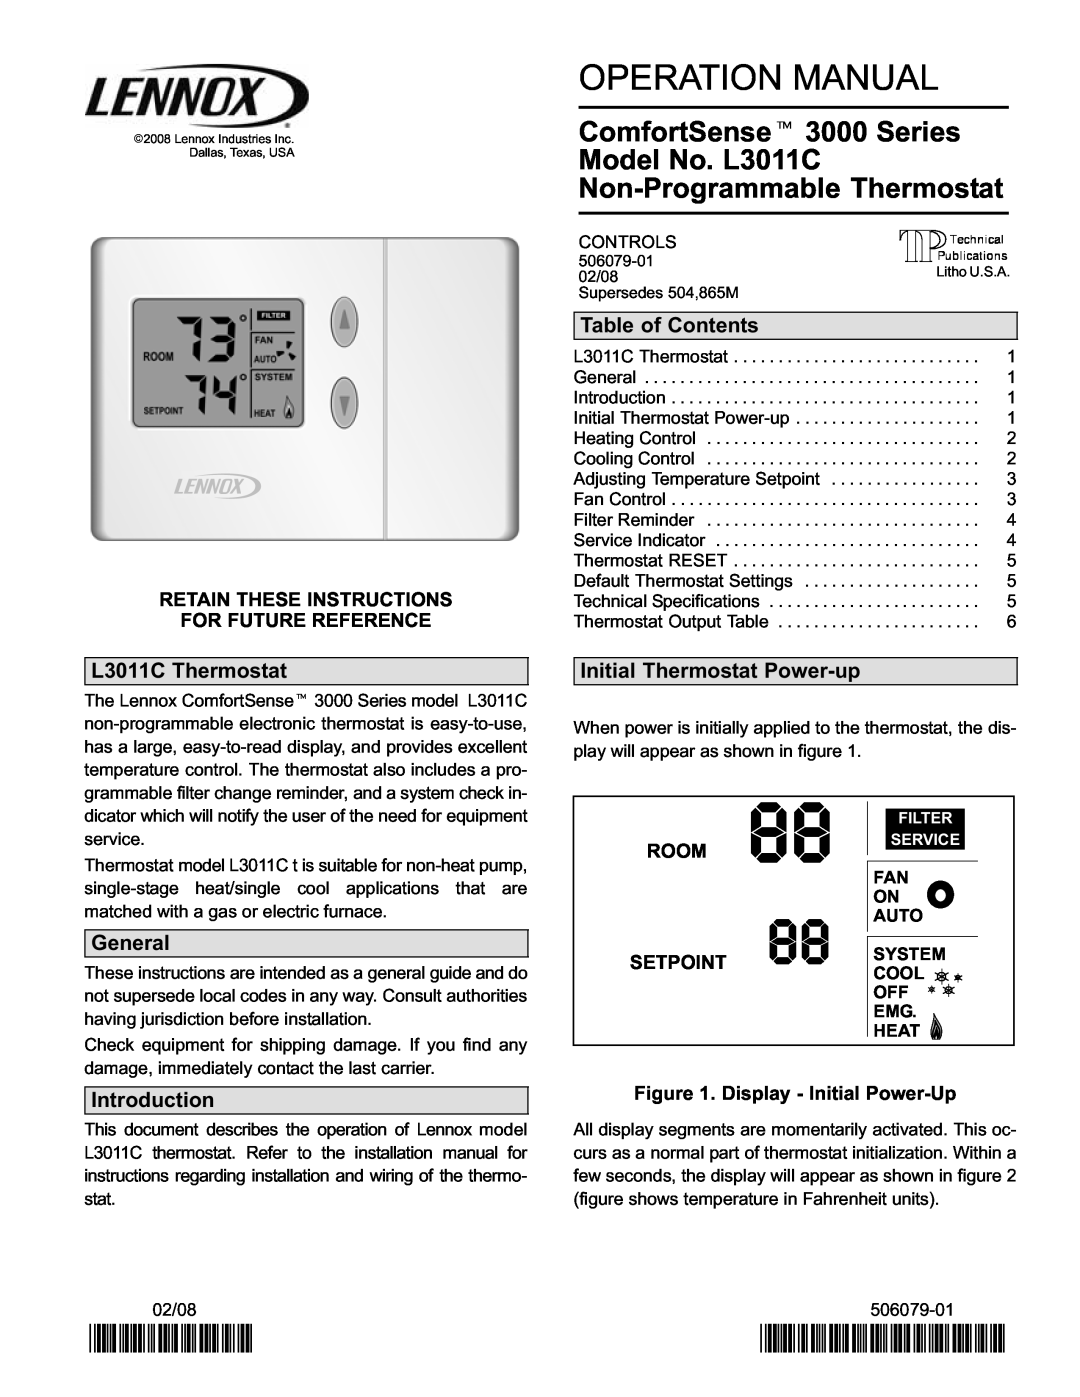 Lennox International Inc ComfortSenset 3000 Series Non-Programmable Thermostat operation manual L3011C Thermostat, General 